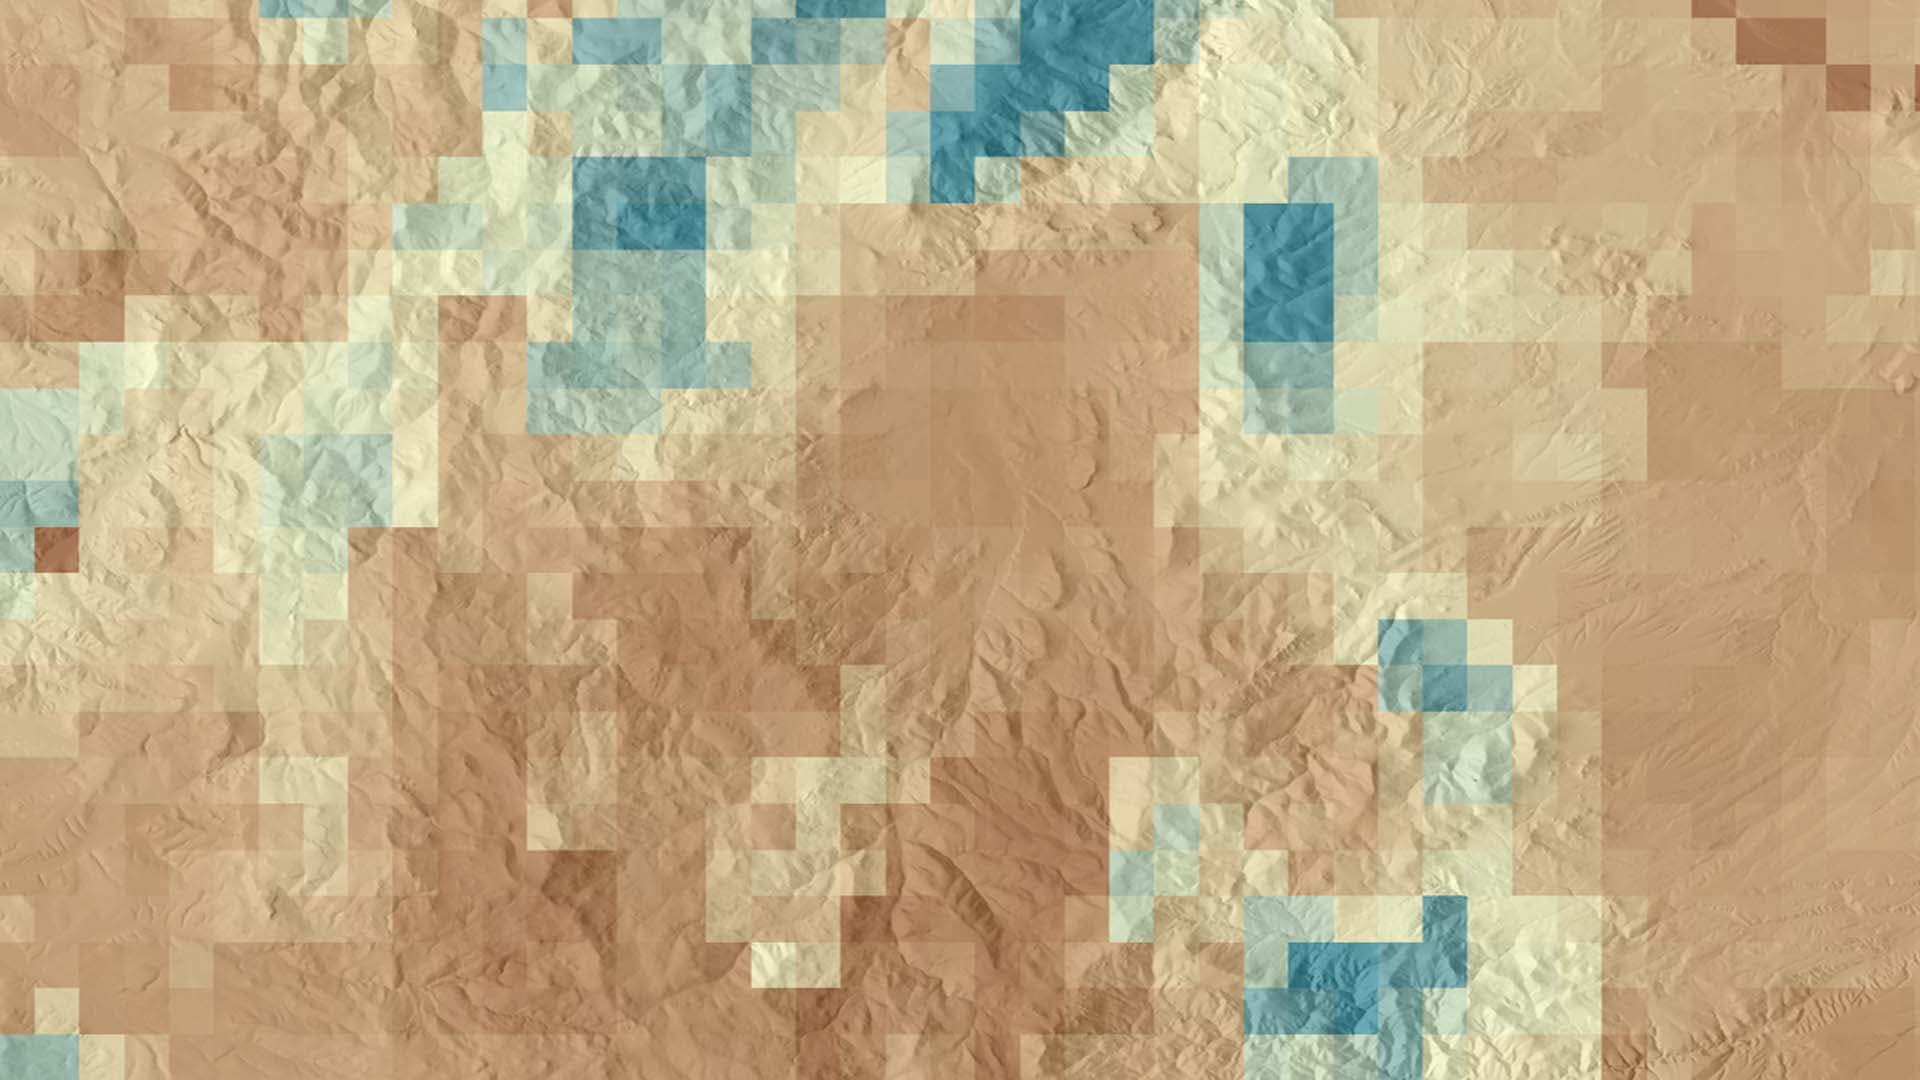 Estimating Soil Moisture in Semi-arid Sagebrush Steppe Utilizing NASA Earth Observations